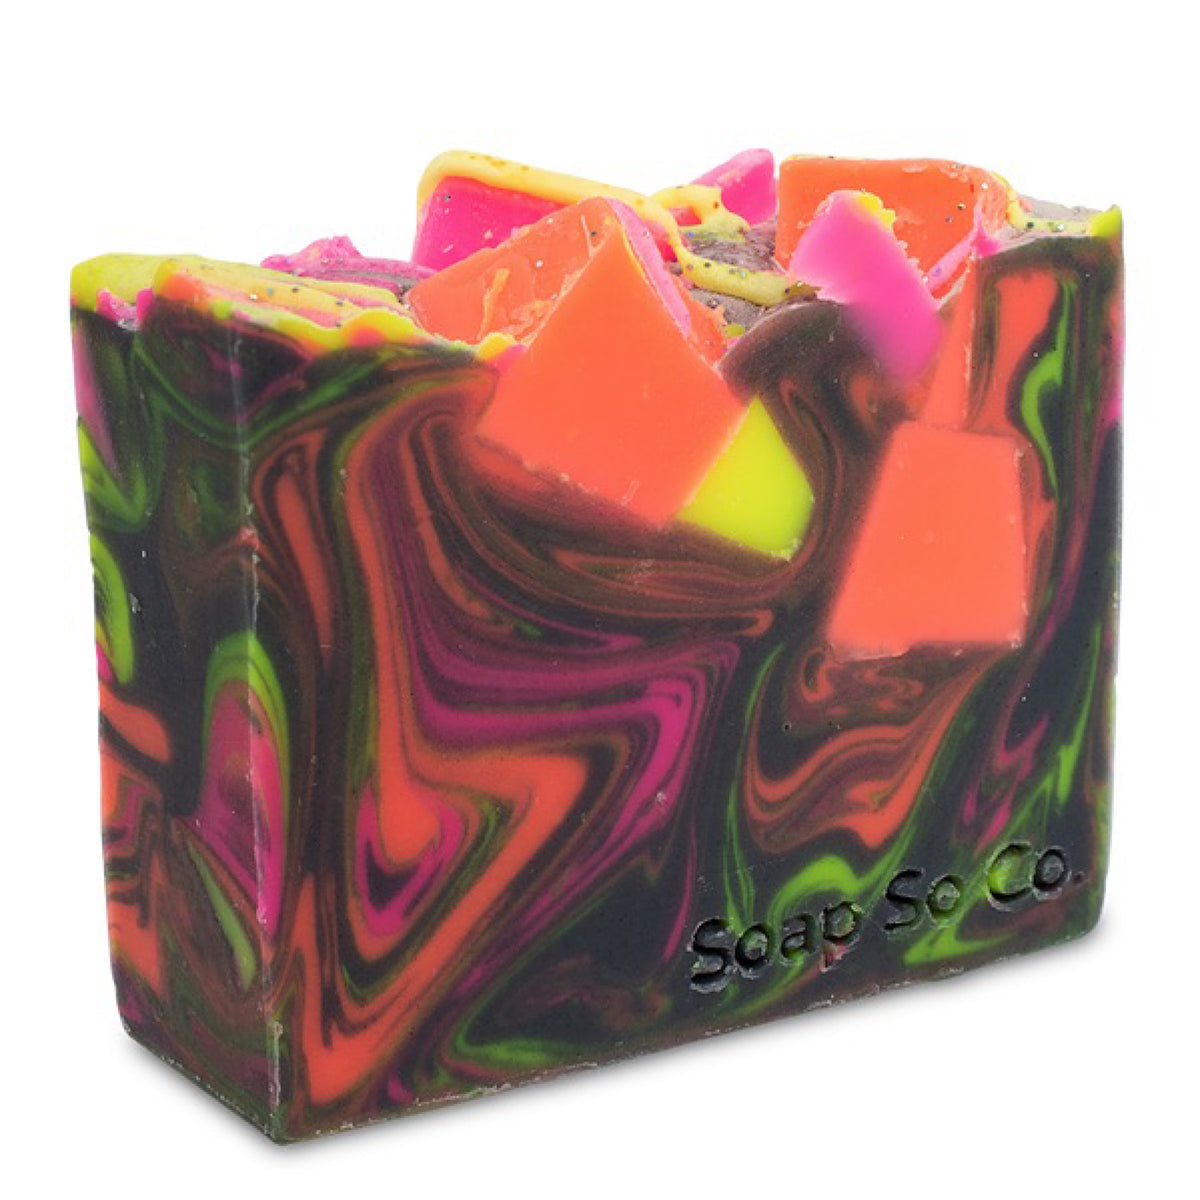 Glow Bar Soap